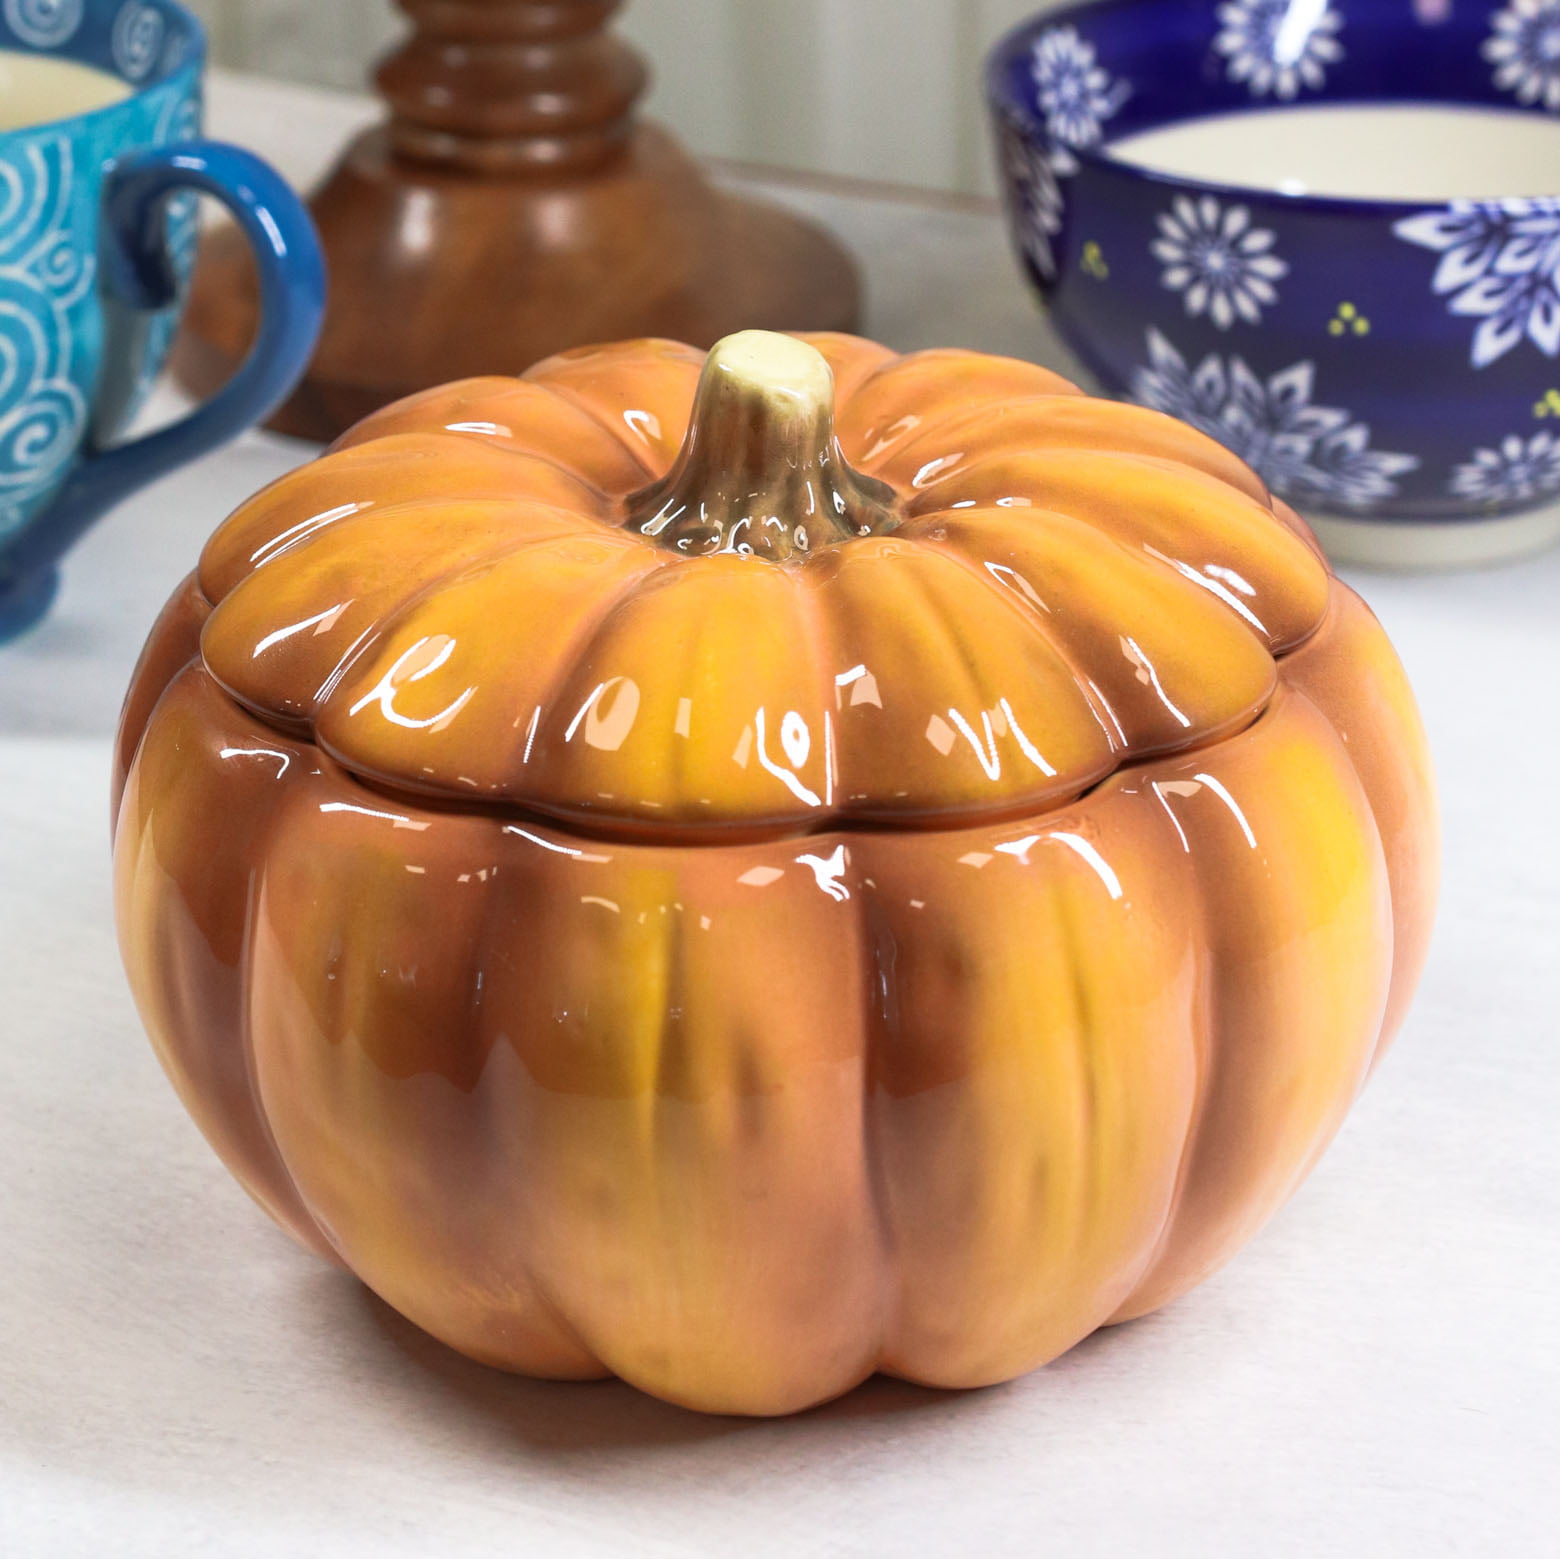 Suoha Halloween Pumpkin Snack Bowl Stand with Ceramic Bowl Home Restaurant Desktop Holiday Decoration